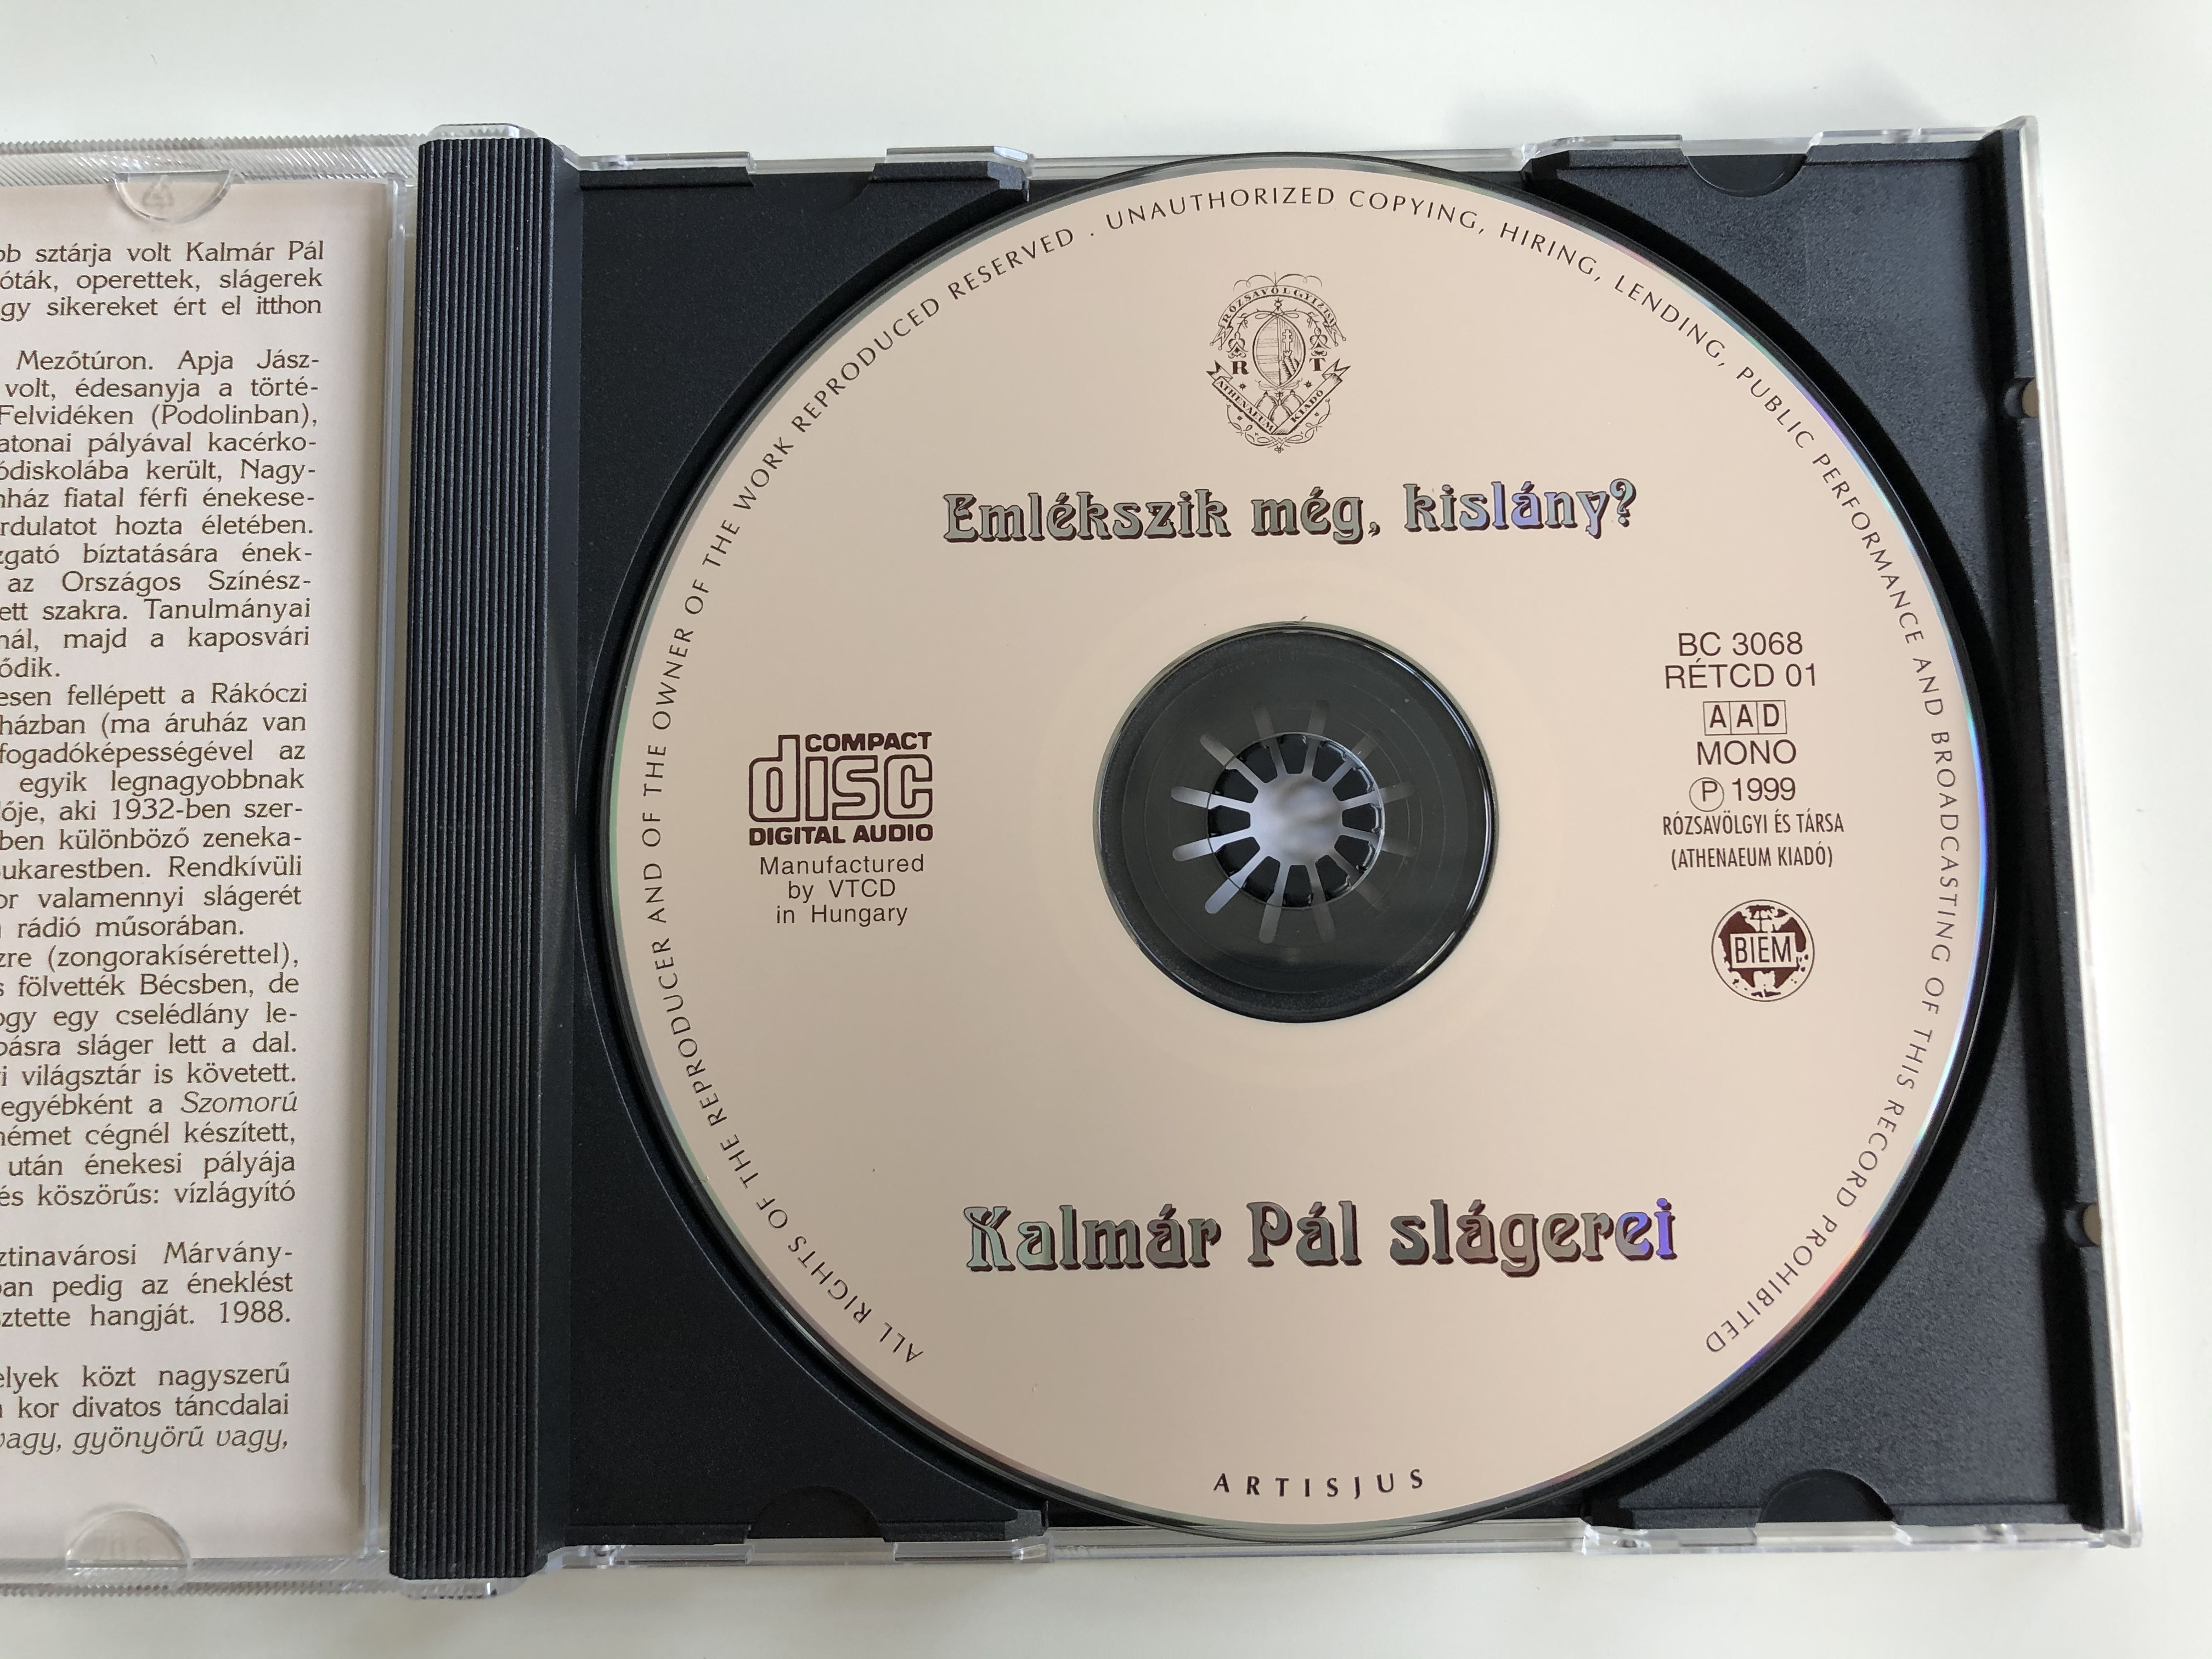 emlekszik-meg-kislany-kalmar-pal-slagerei-r-zsav-lgyi-s-t-rsa-audio-cd-1999-mono-r-tcd-01-4-.jpg